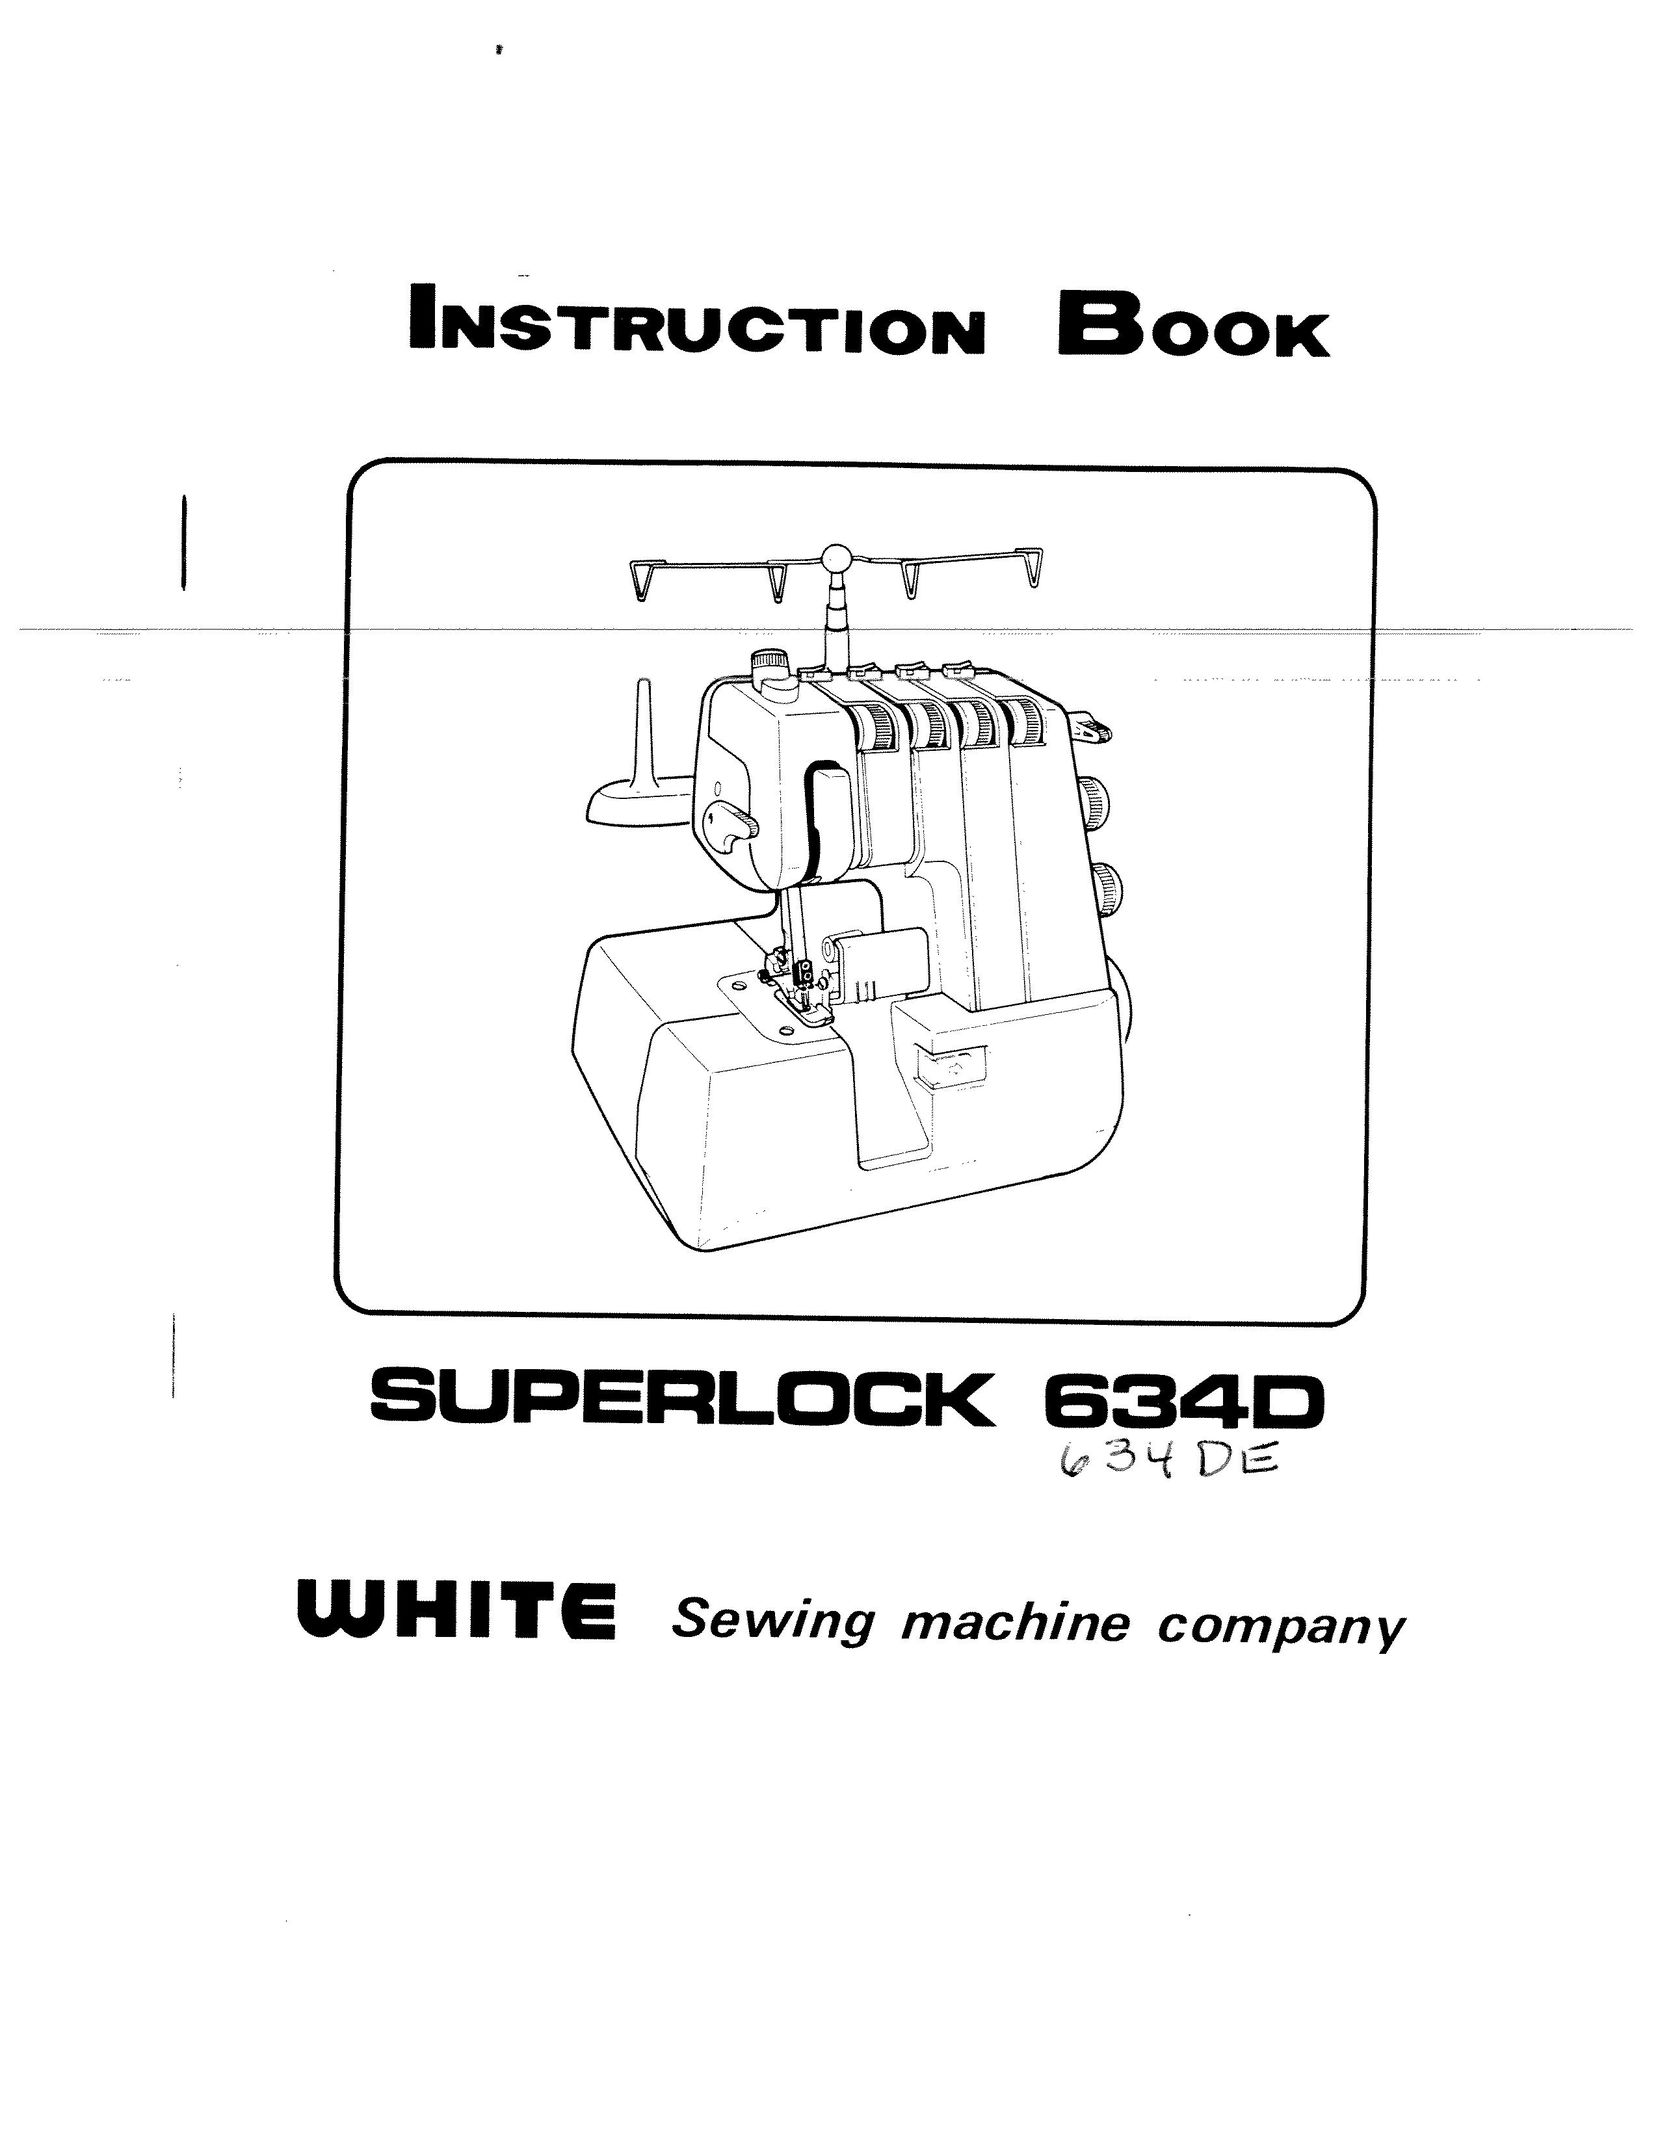 White 634D Sewing Machine User Manual